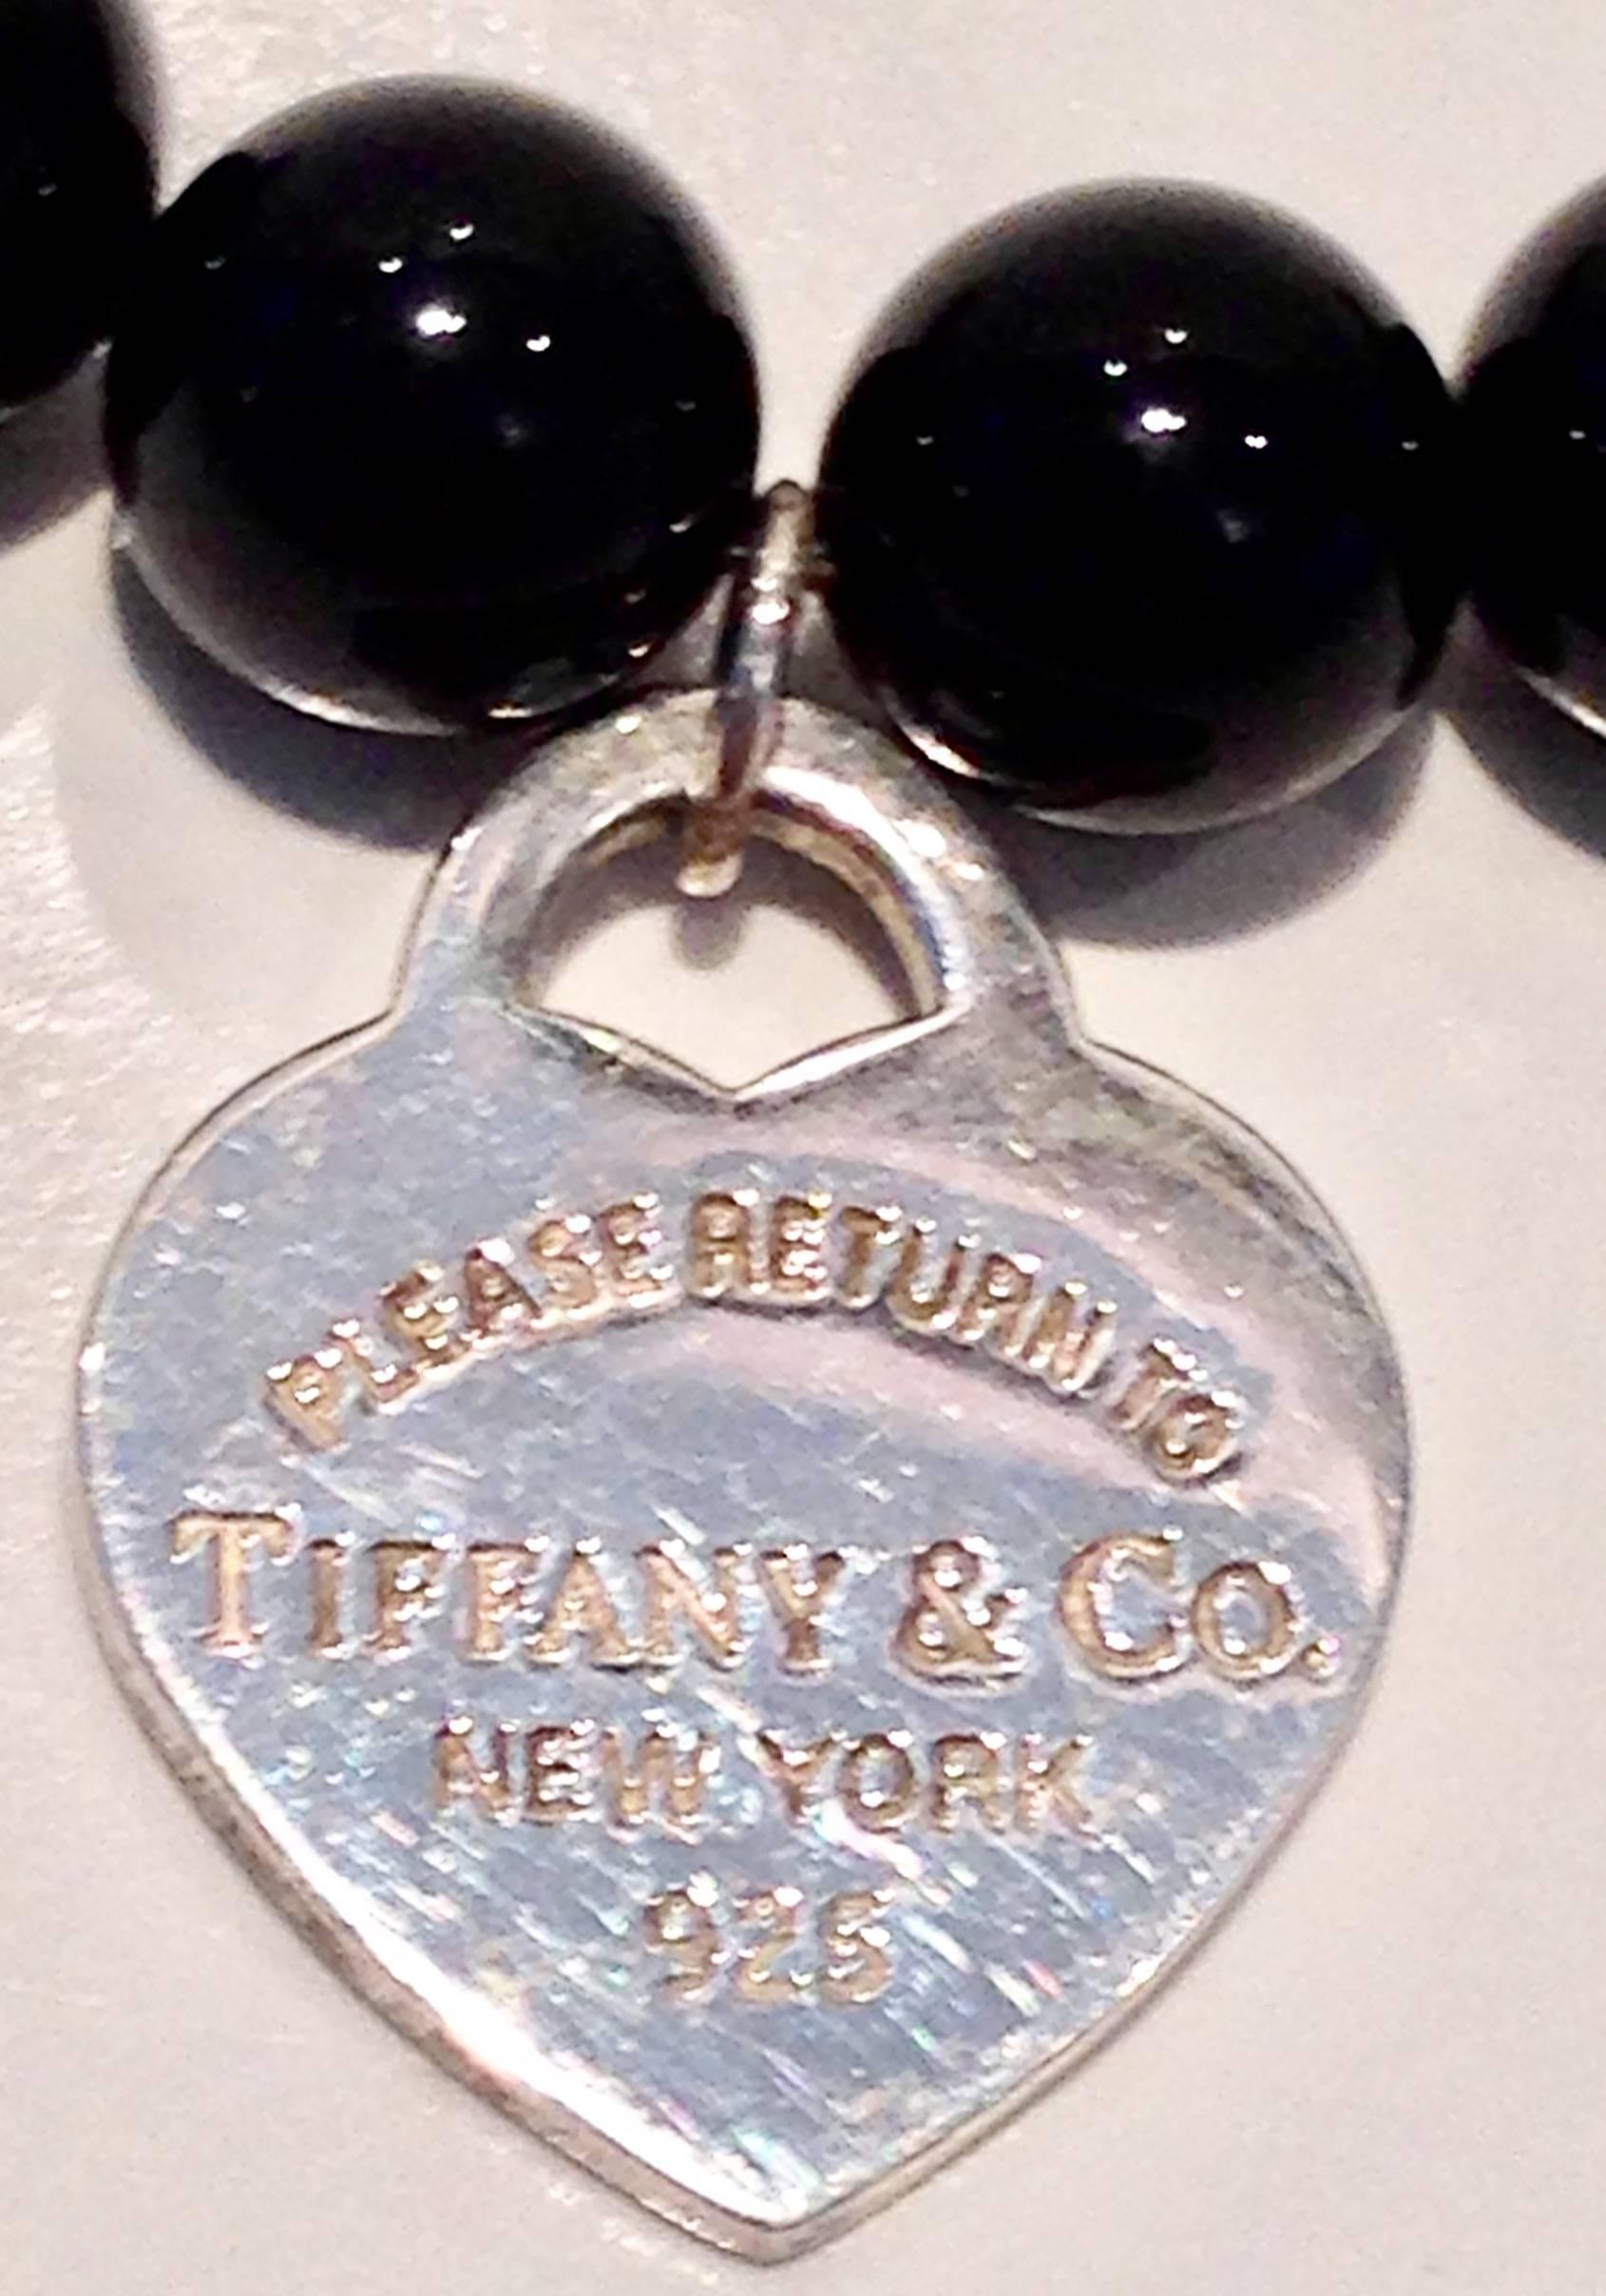 American Tiffany & Co. Silver Heart Tag 7.5' Black Onyx Bead Bracelet